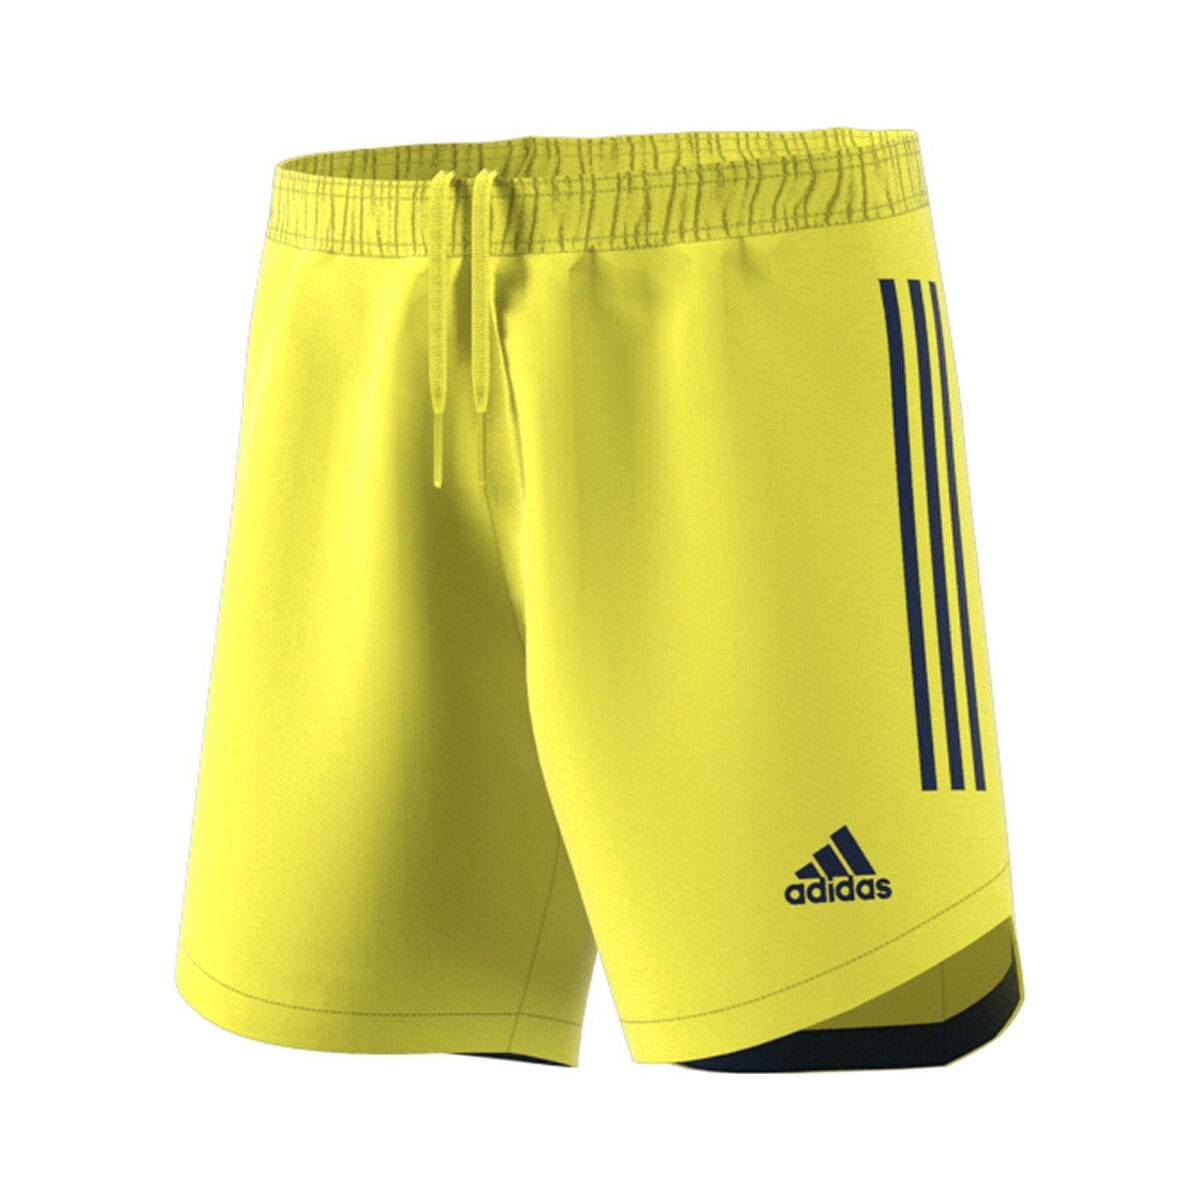 adidas Men's Condivo 20 Short Shorts Adidas Adult Small shock yellow/team navy blue 